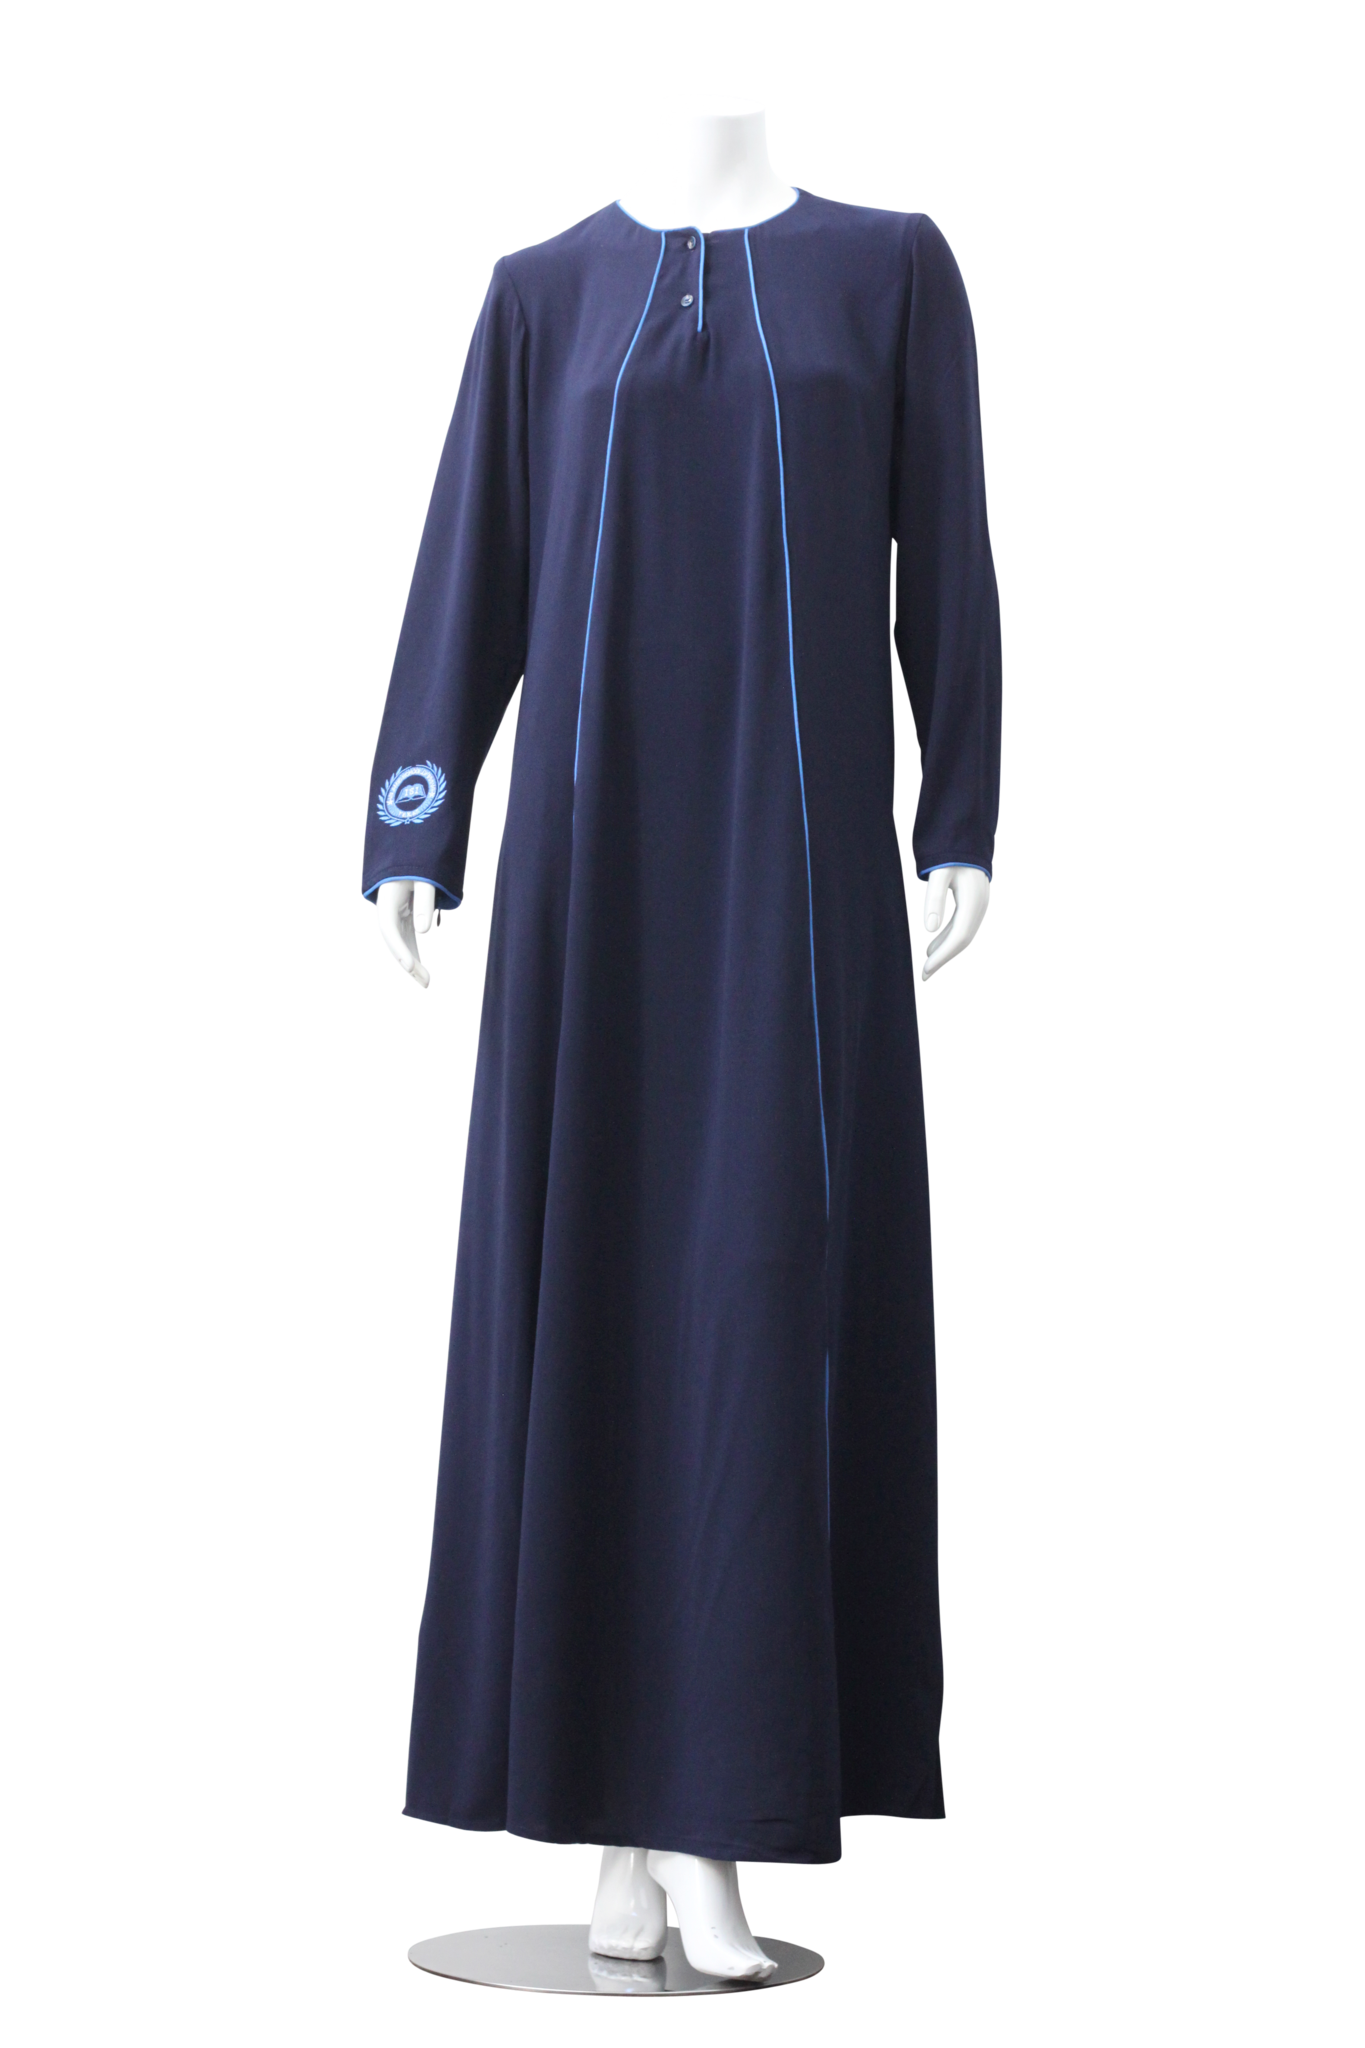 Islamic School of Irving Uniform Abaya - Women's